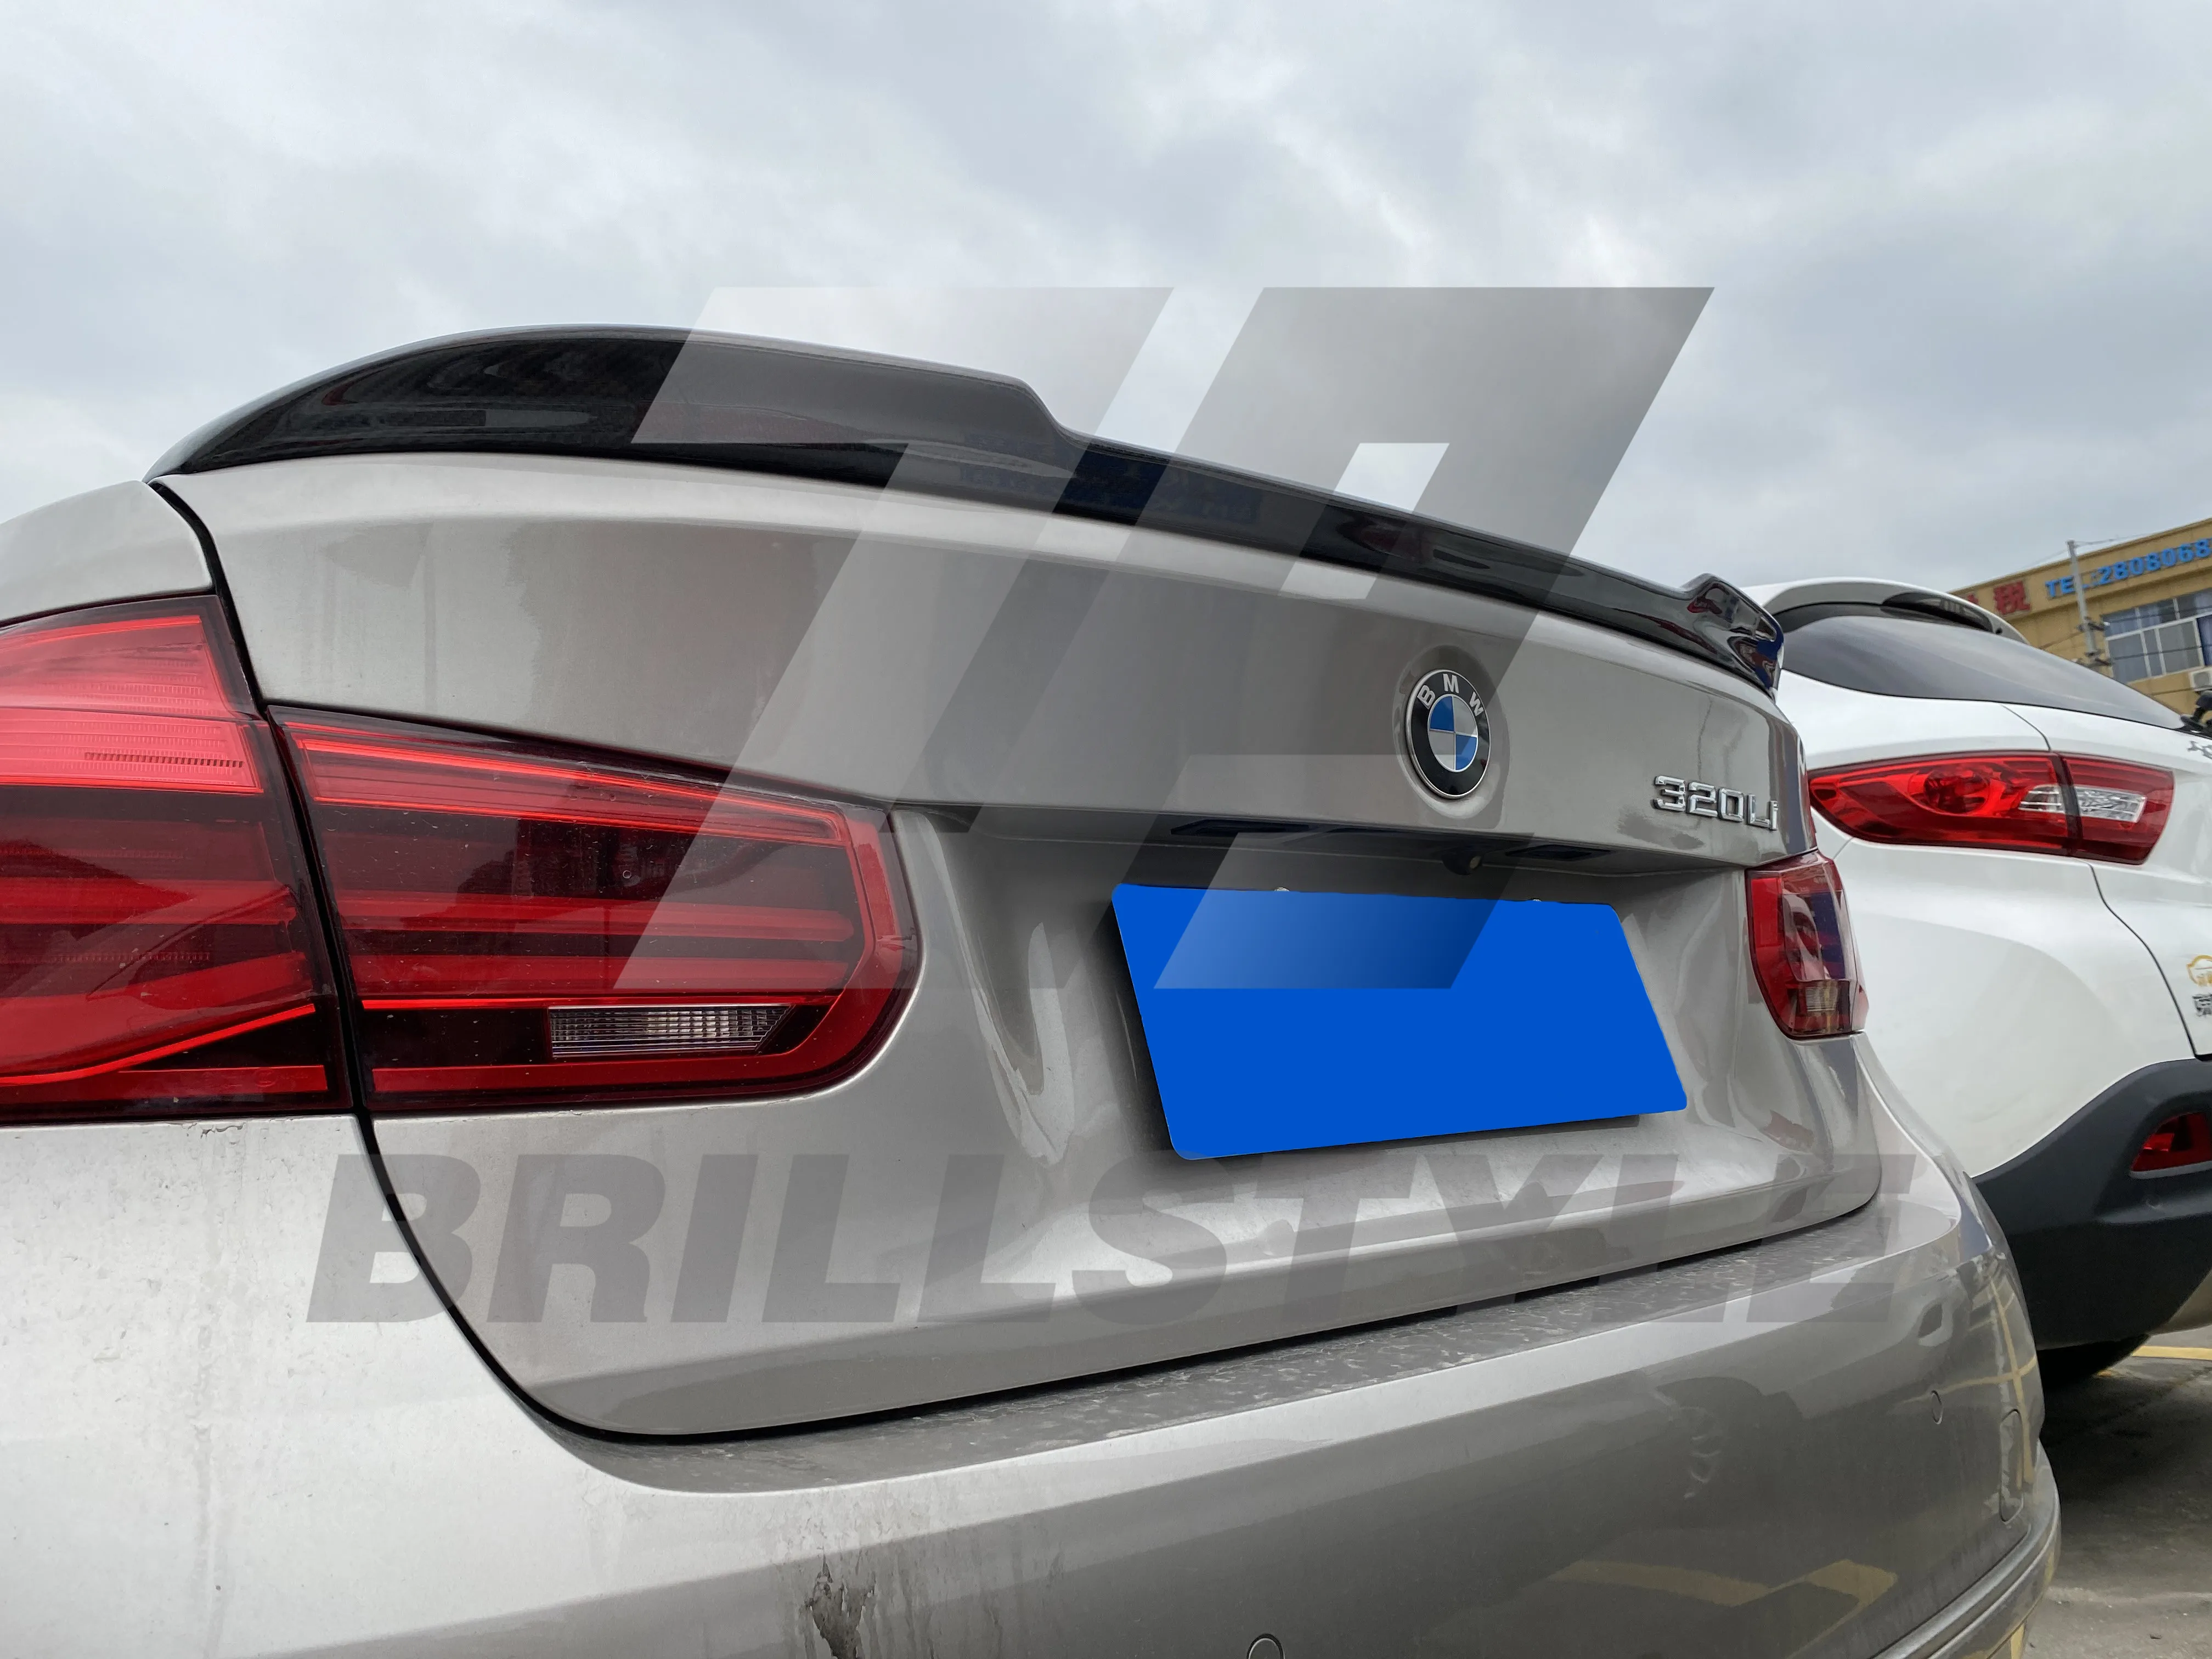 AniFM Alas del Maletero Trasero Spoiler Trasero Material de Fibra de Carbono M Rendimiento para BMW F30 F80 M3 2012-2018 320i 328i 335i 326D F30,A